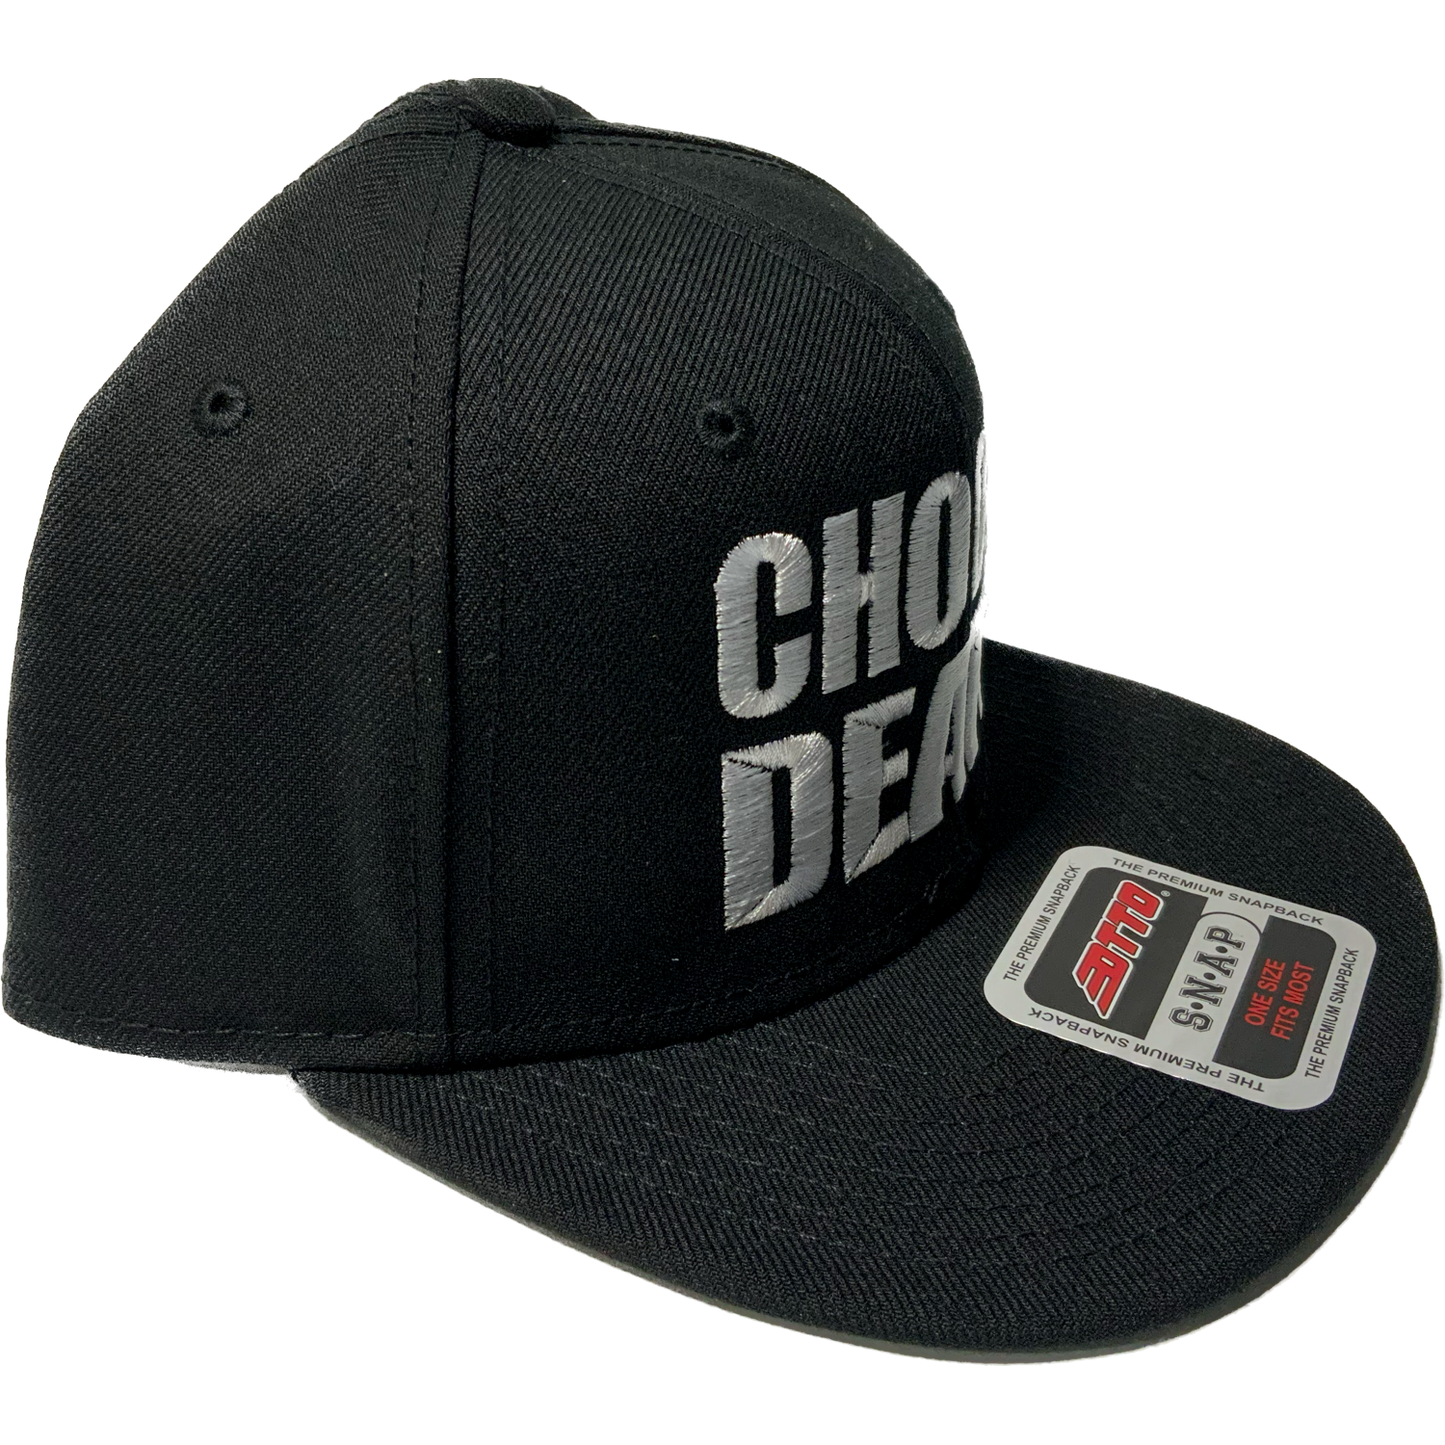 Choose Death (Snapback Hat)